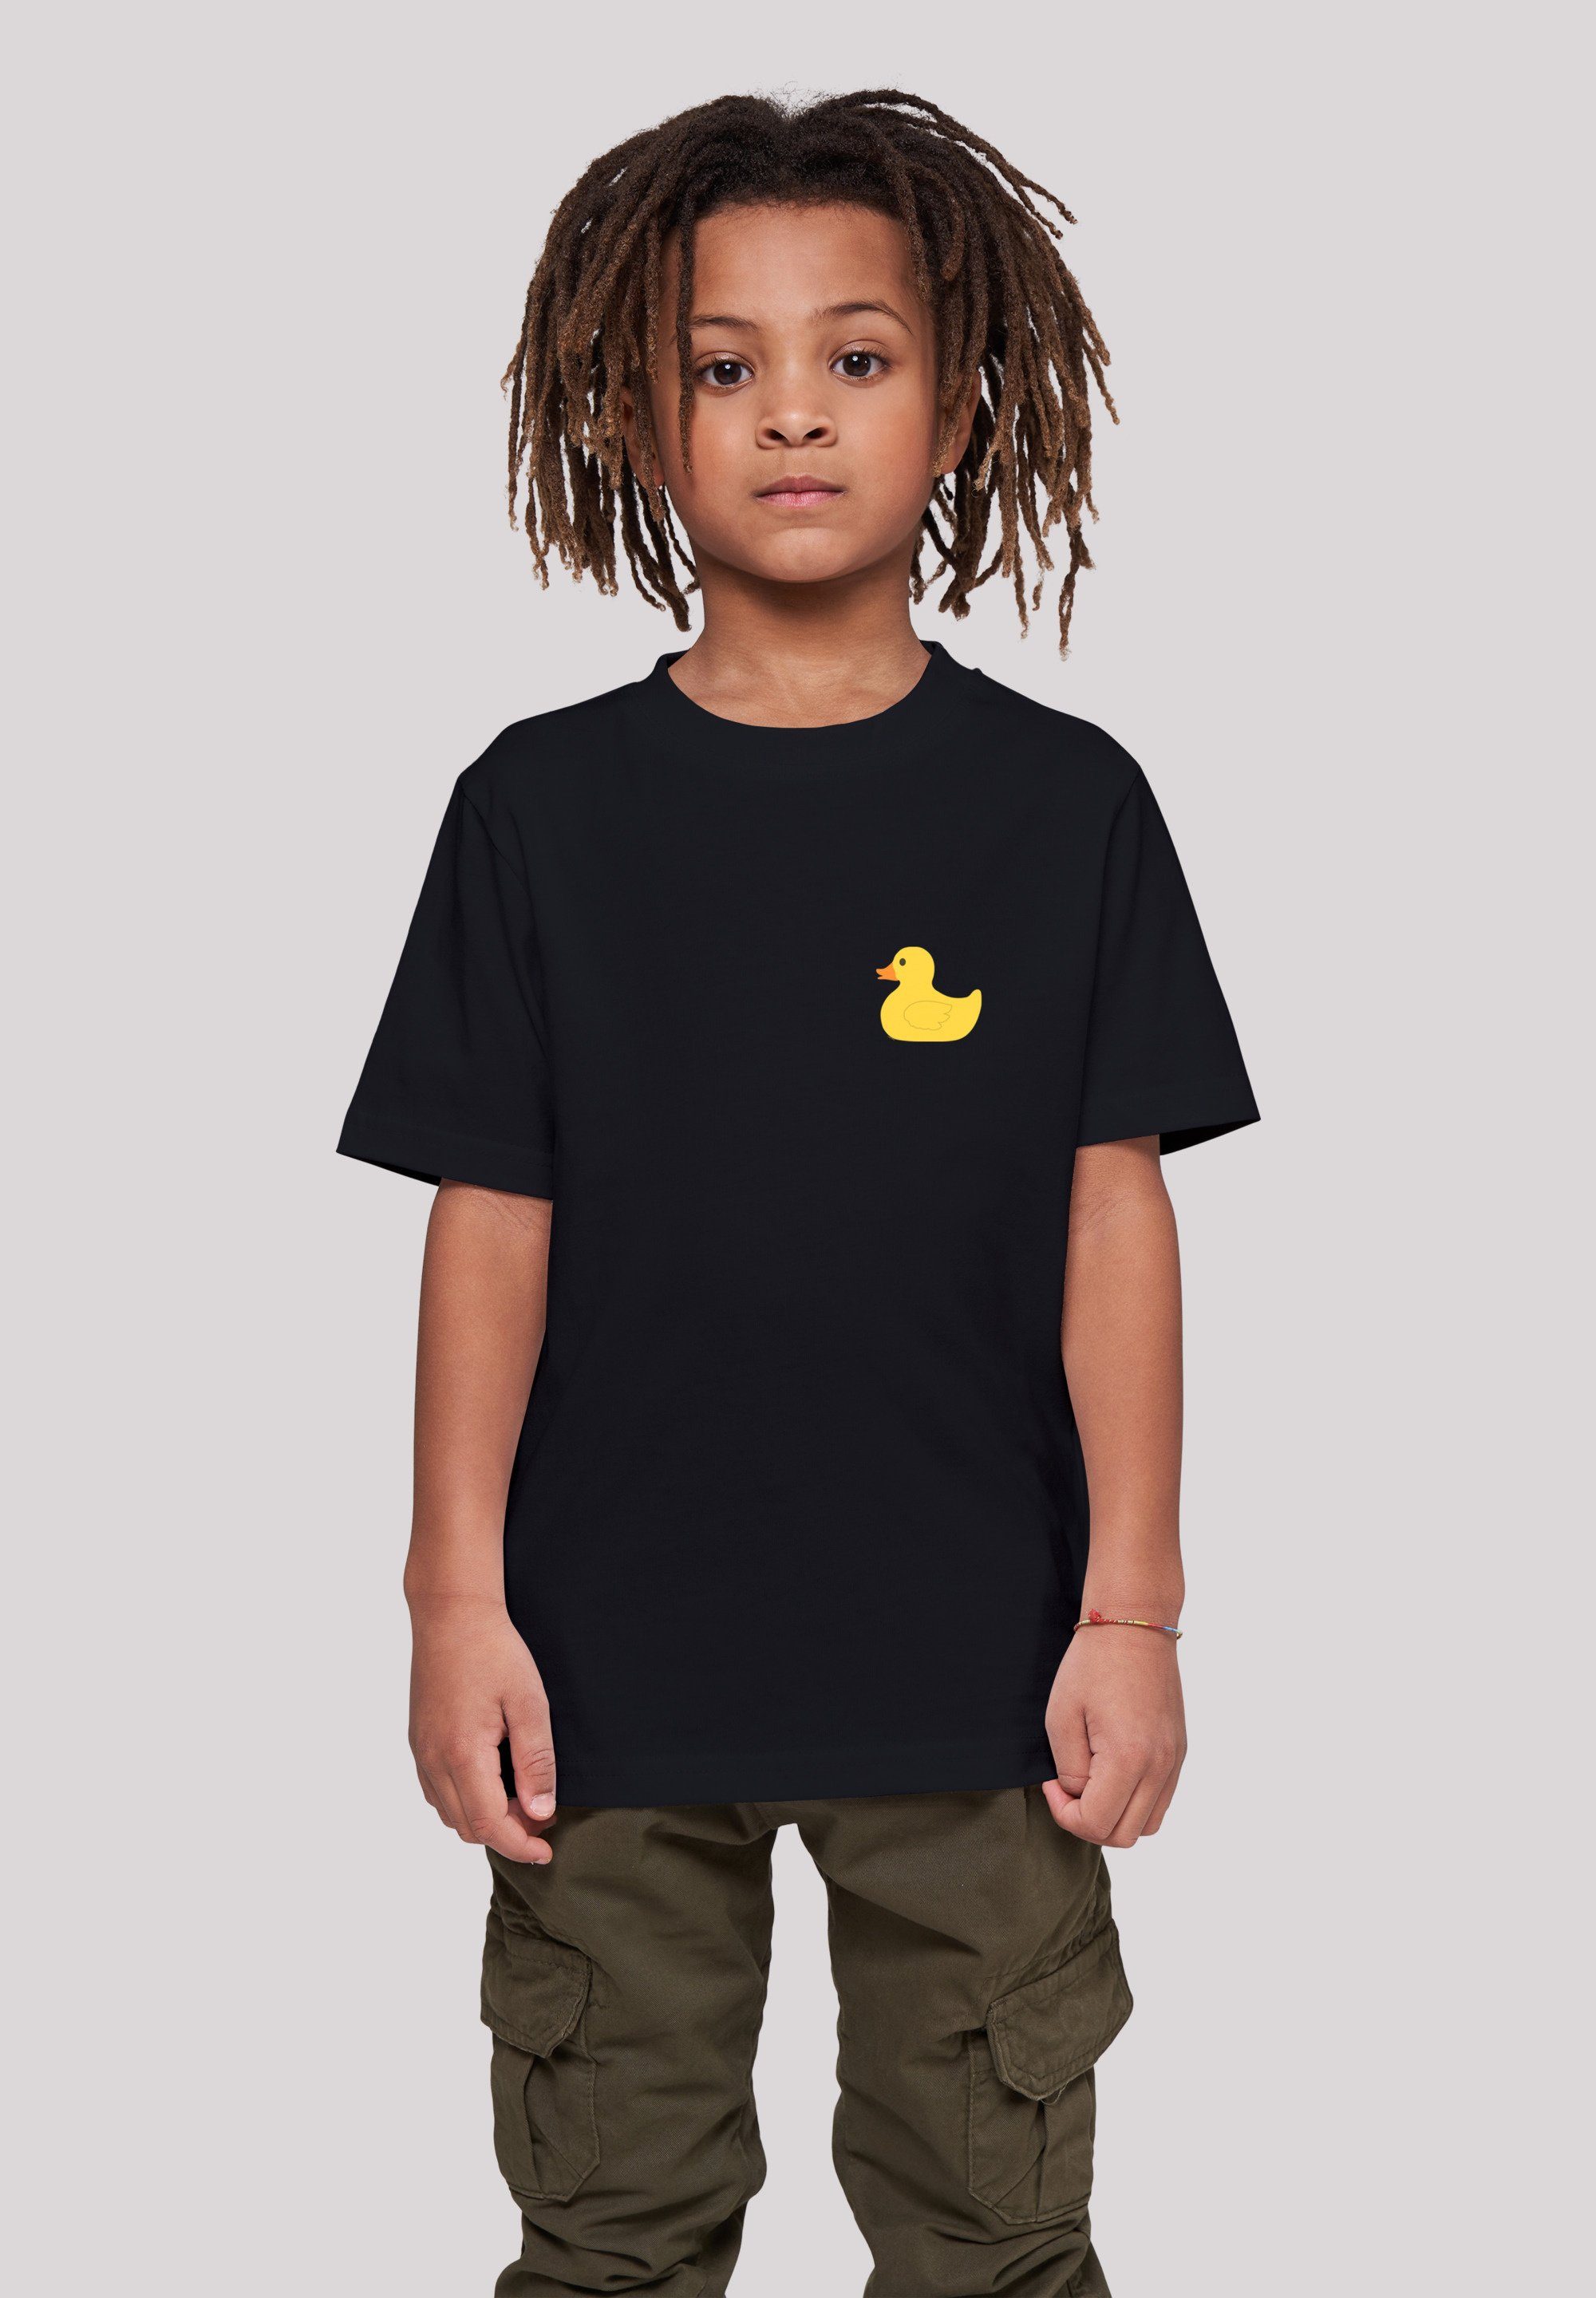 F4NT4STIC T-Shirt Yellow Rubber Duck TEE UNISEX Print schwarz